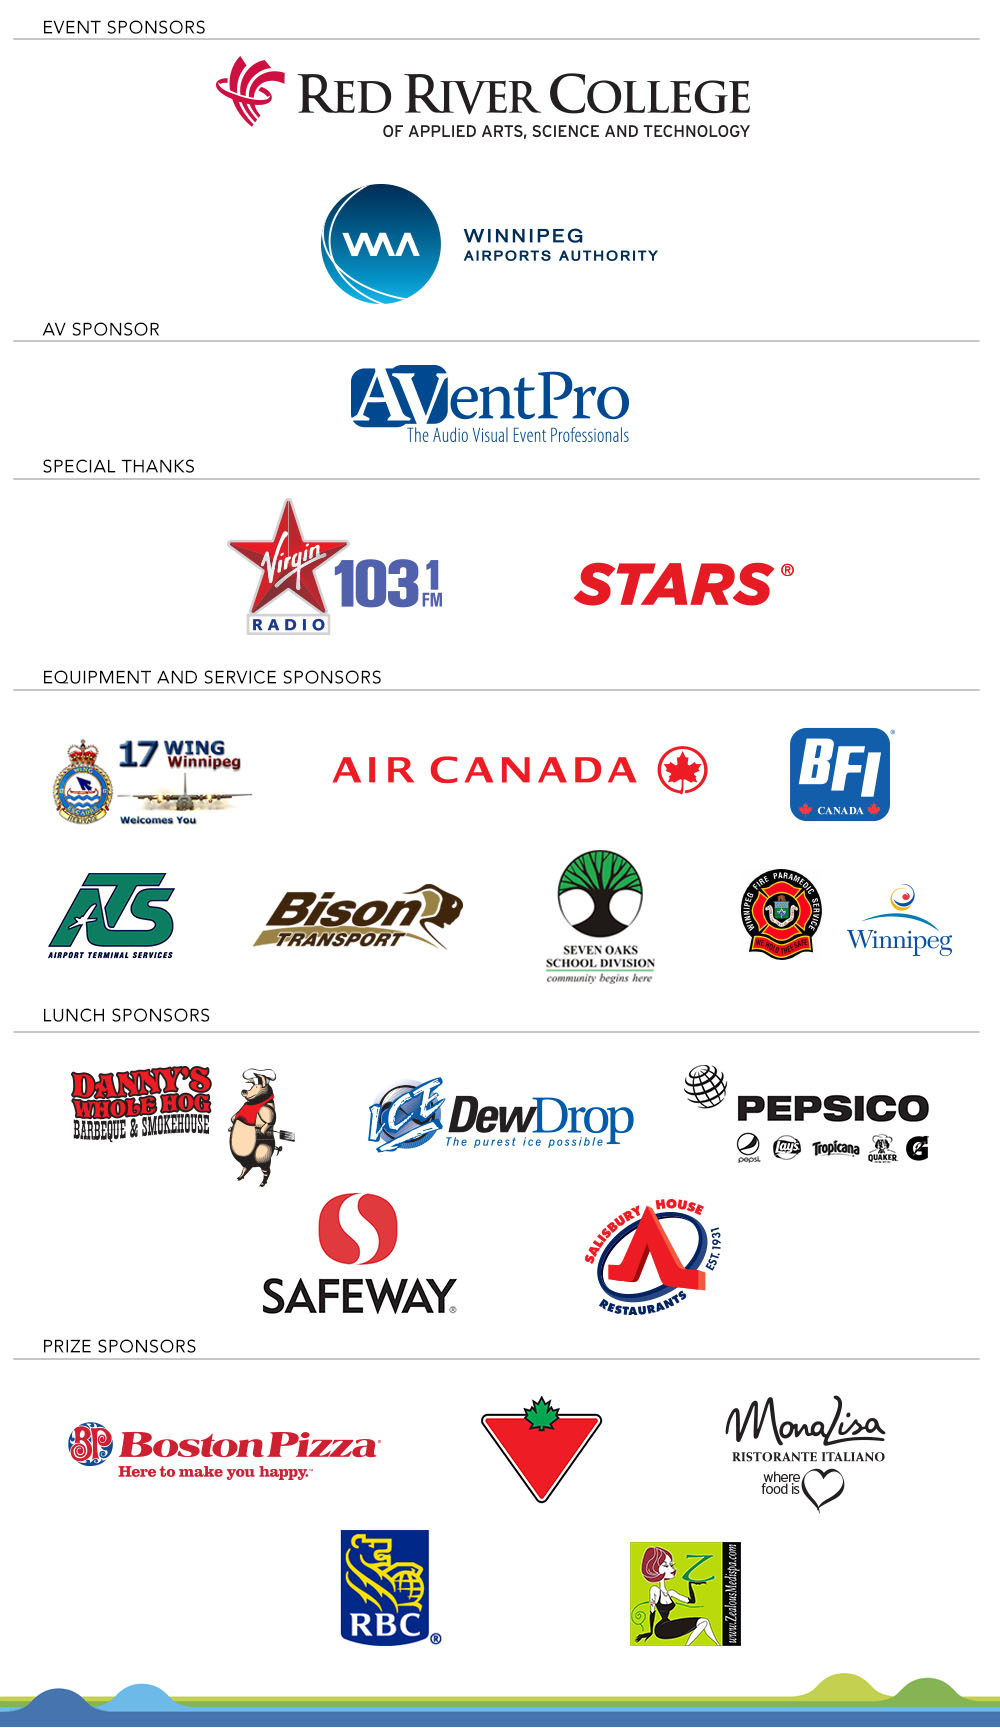 2012 United Way Plane Pull sponsors